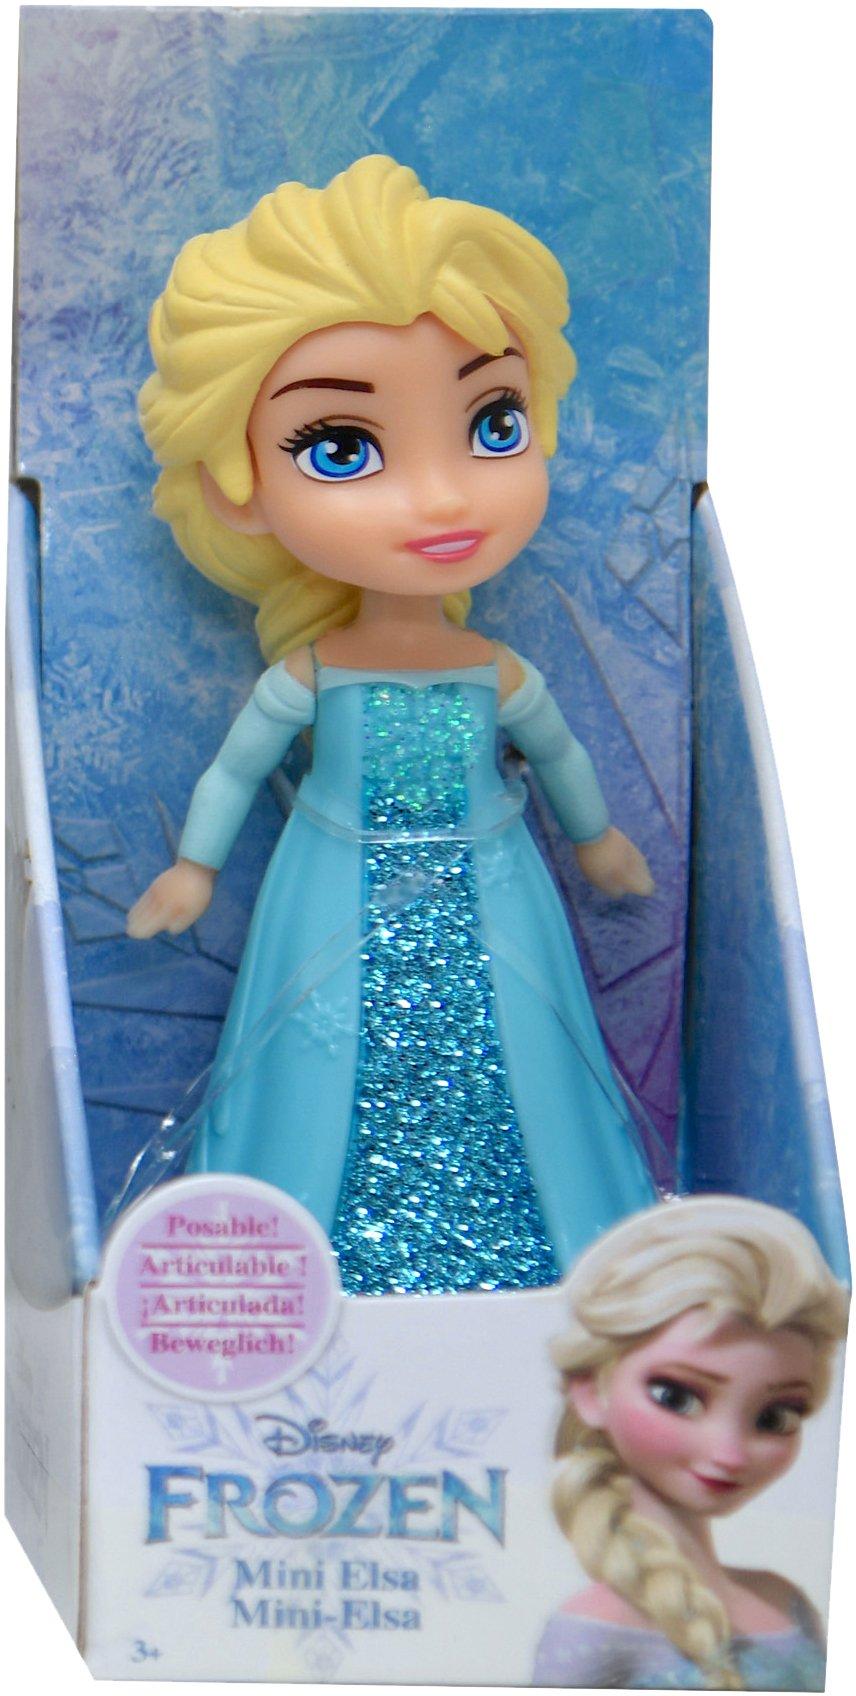 Disney Frozen Frozen Mini Elsa Core Dress - image 1 of 2